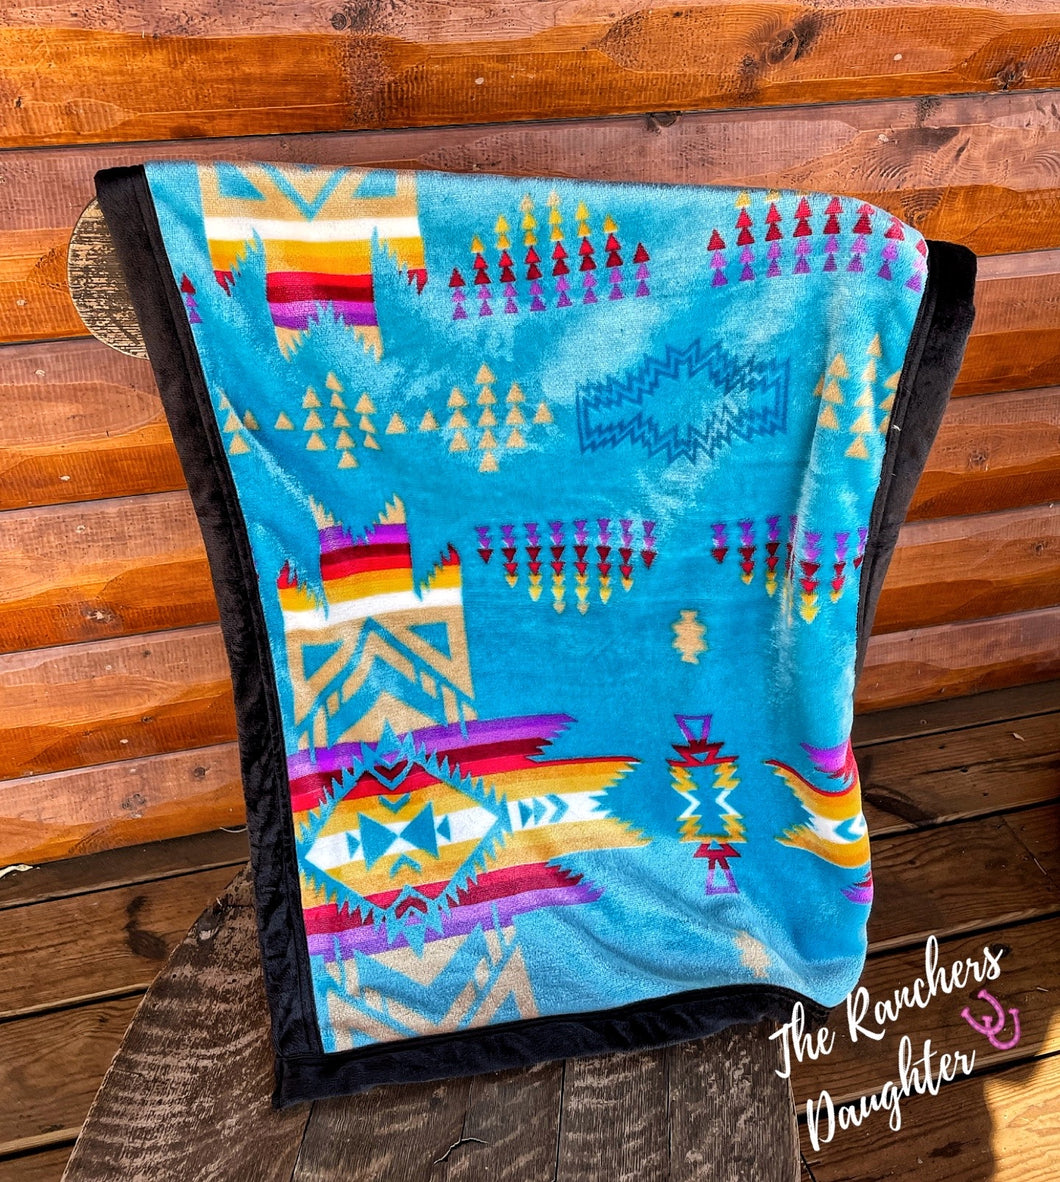 Aztec Stroller Baby Plush Blankets